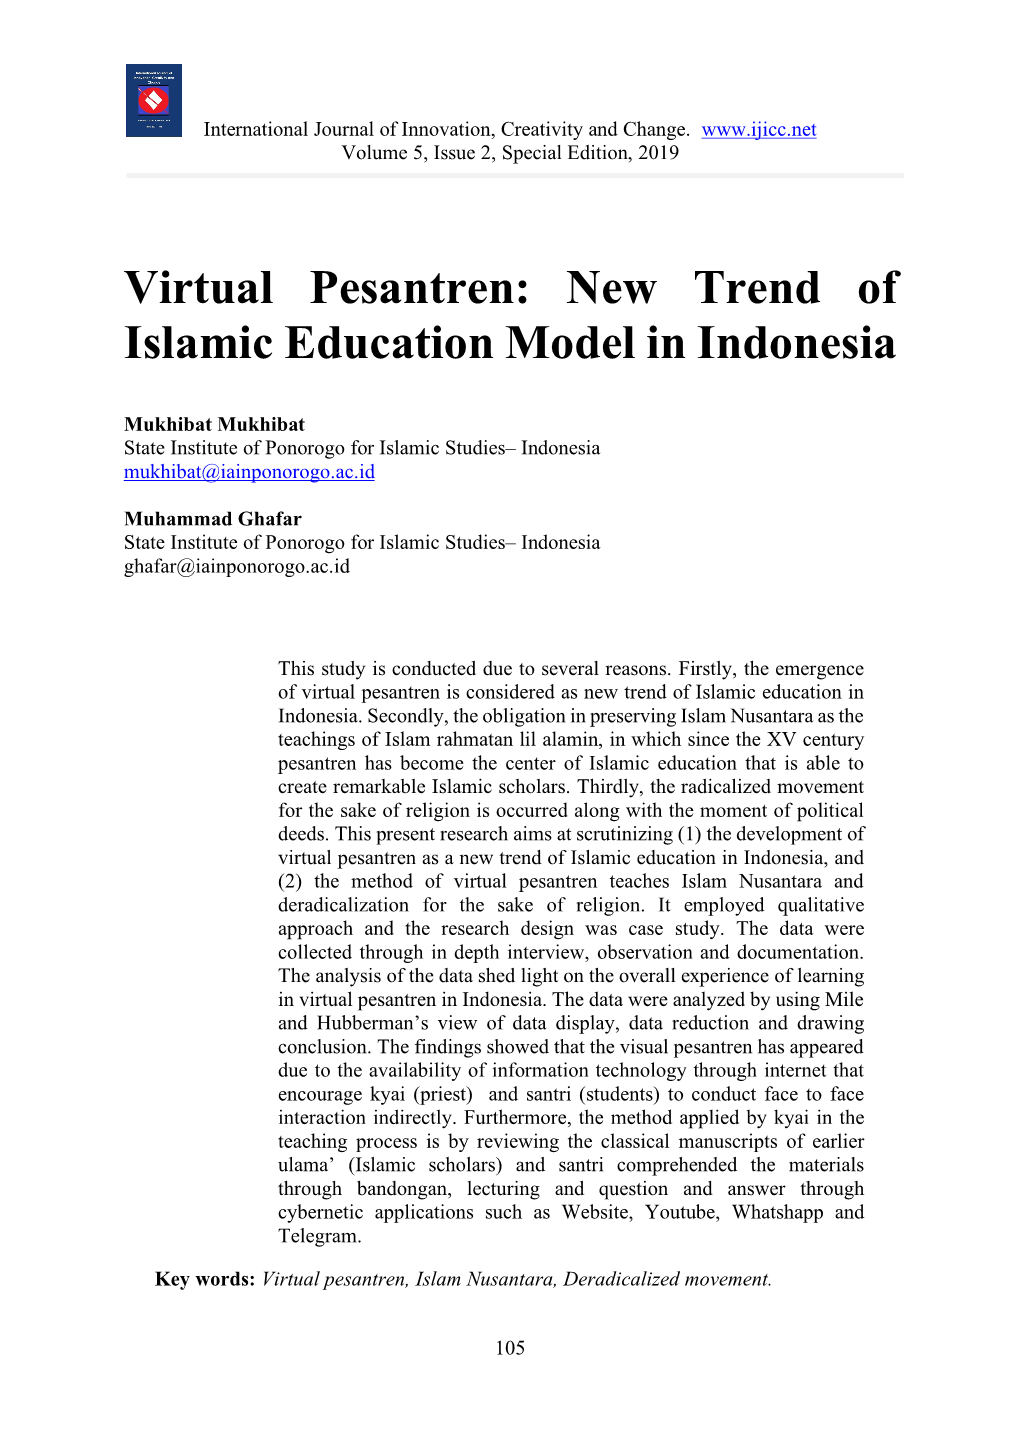 Virtual Pesantren: New Trend of Islamic Education Model in Indonesia